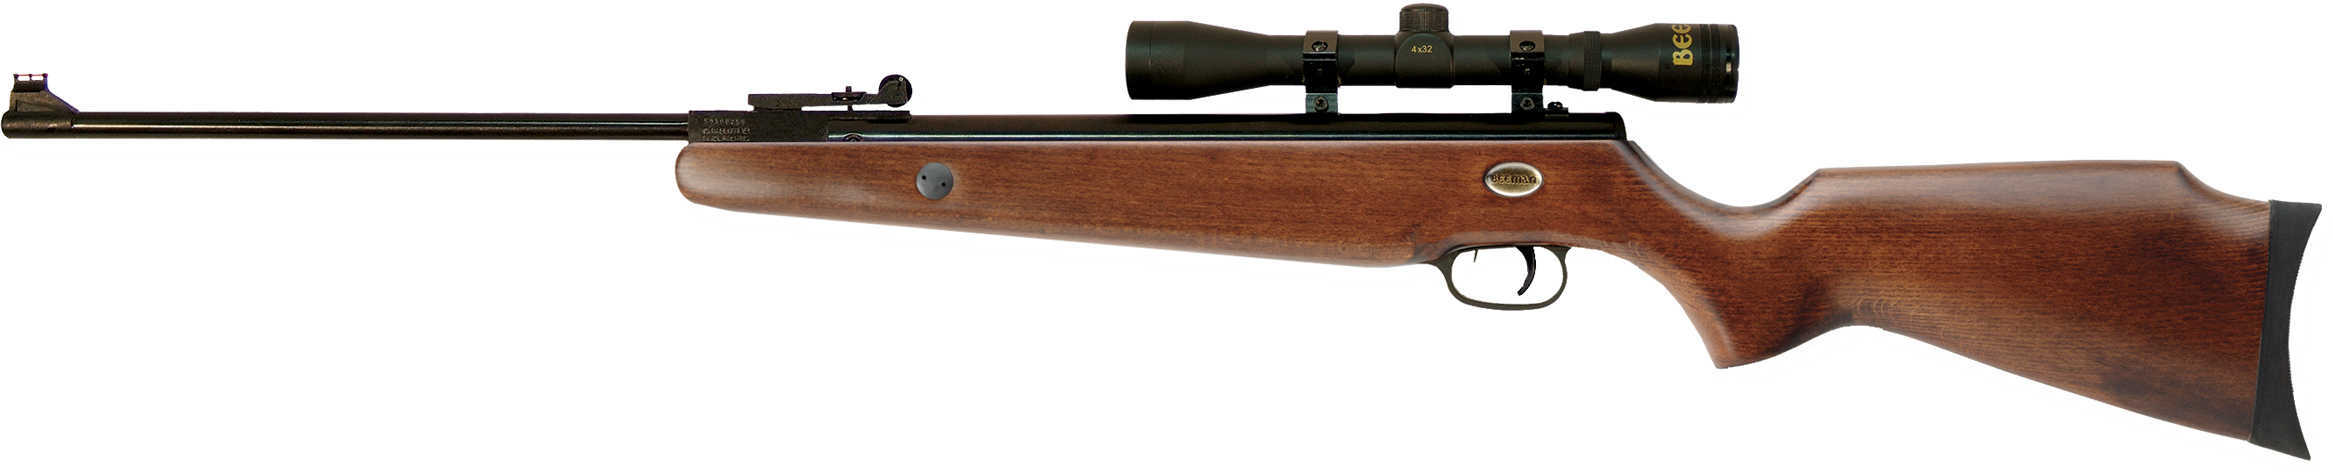 Beeman TETON Air Rifle 22 W/4X32 Scope